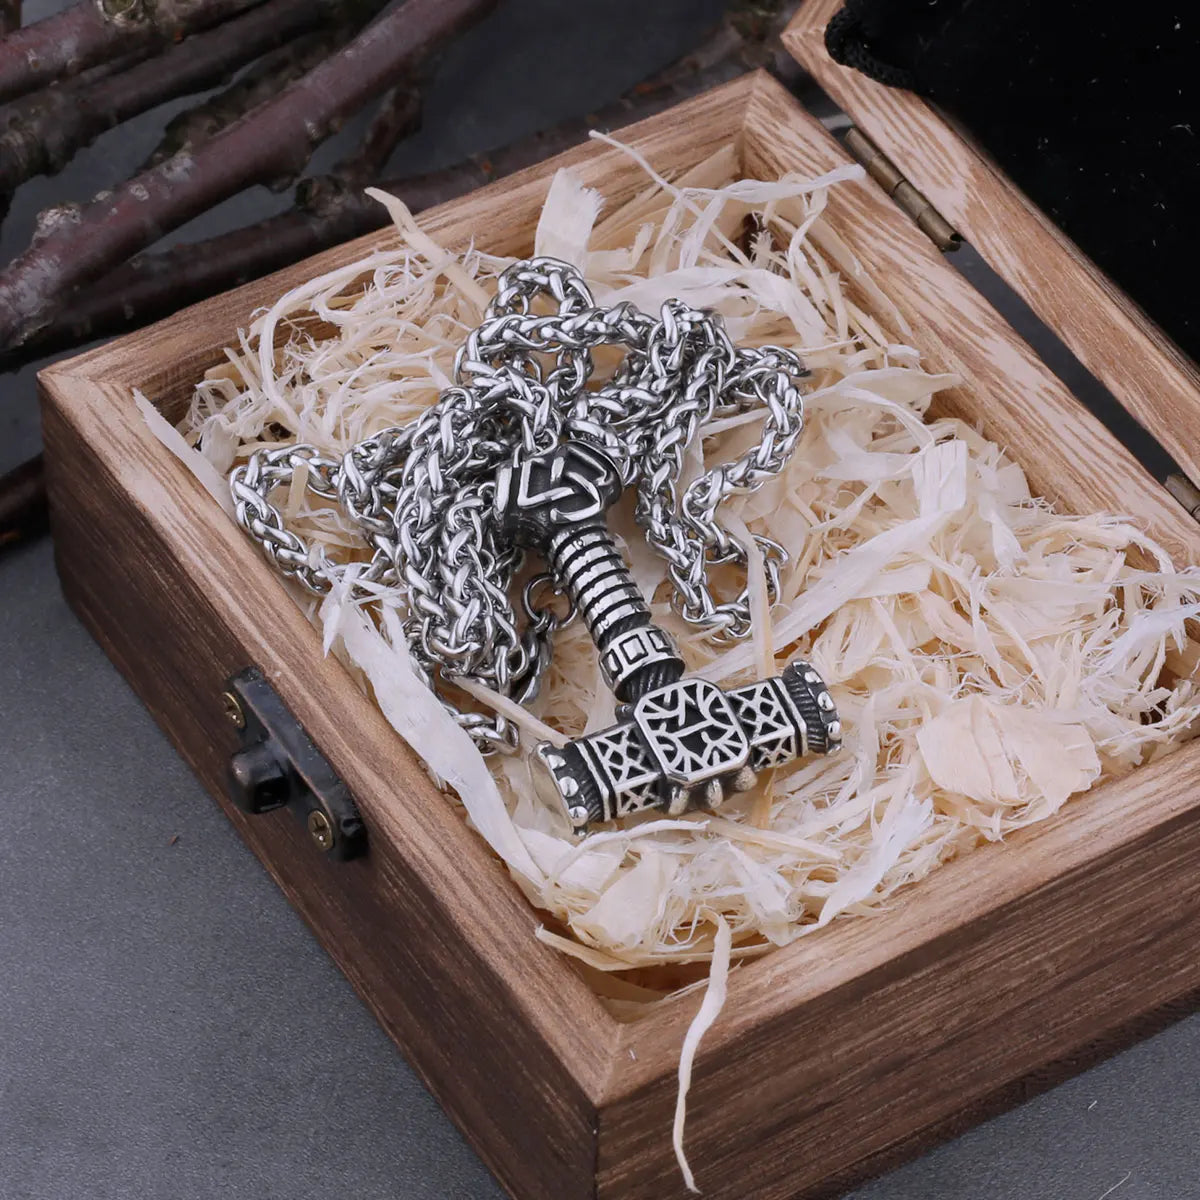 Stainless Steel Knot Dragon Thor's Hammer Mjolnir Viking Necklace